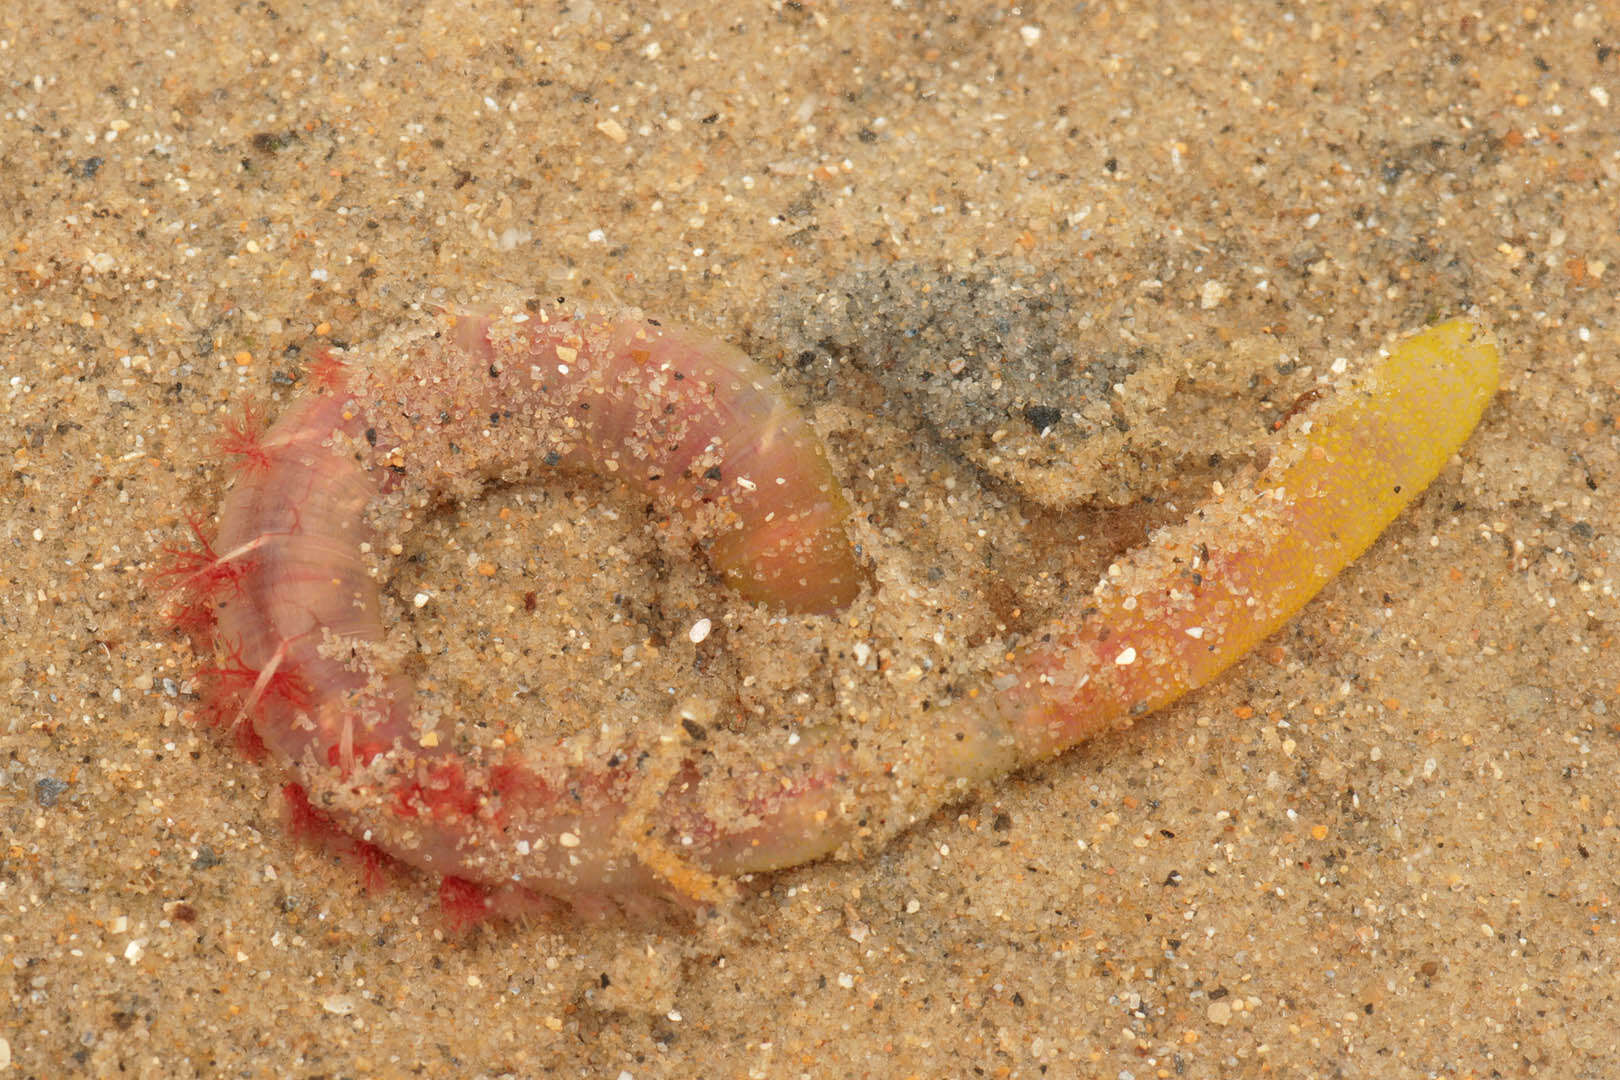 Image of lugworm